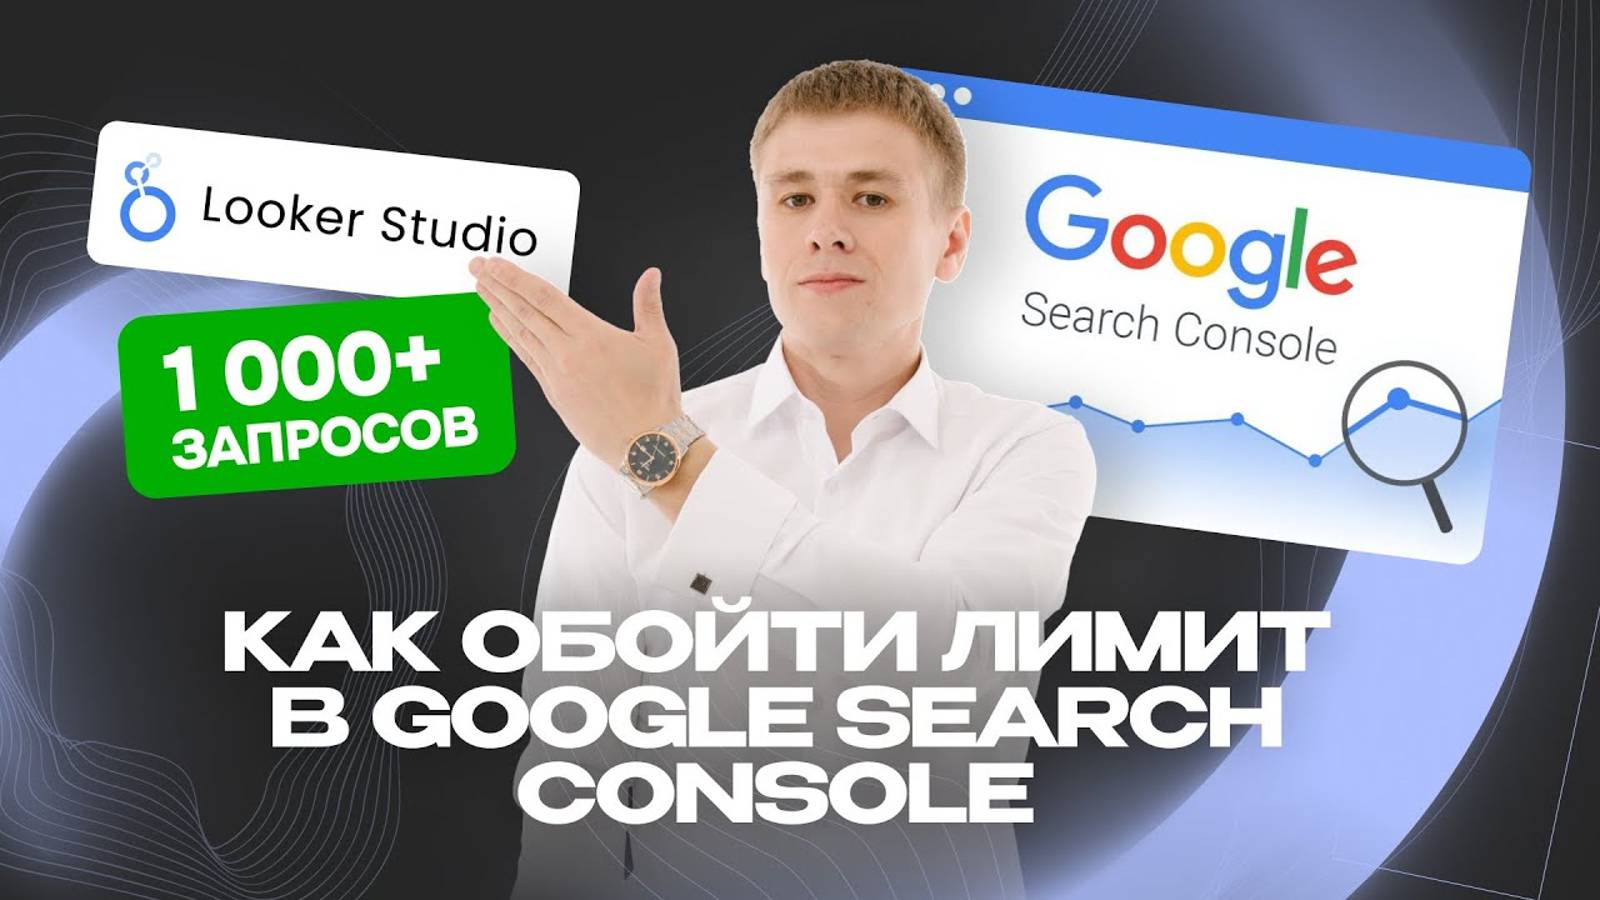 Максимум запросов из Google Search Console через Looker Studio